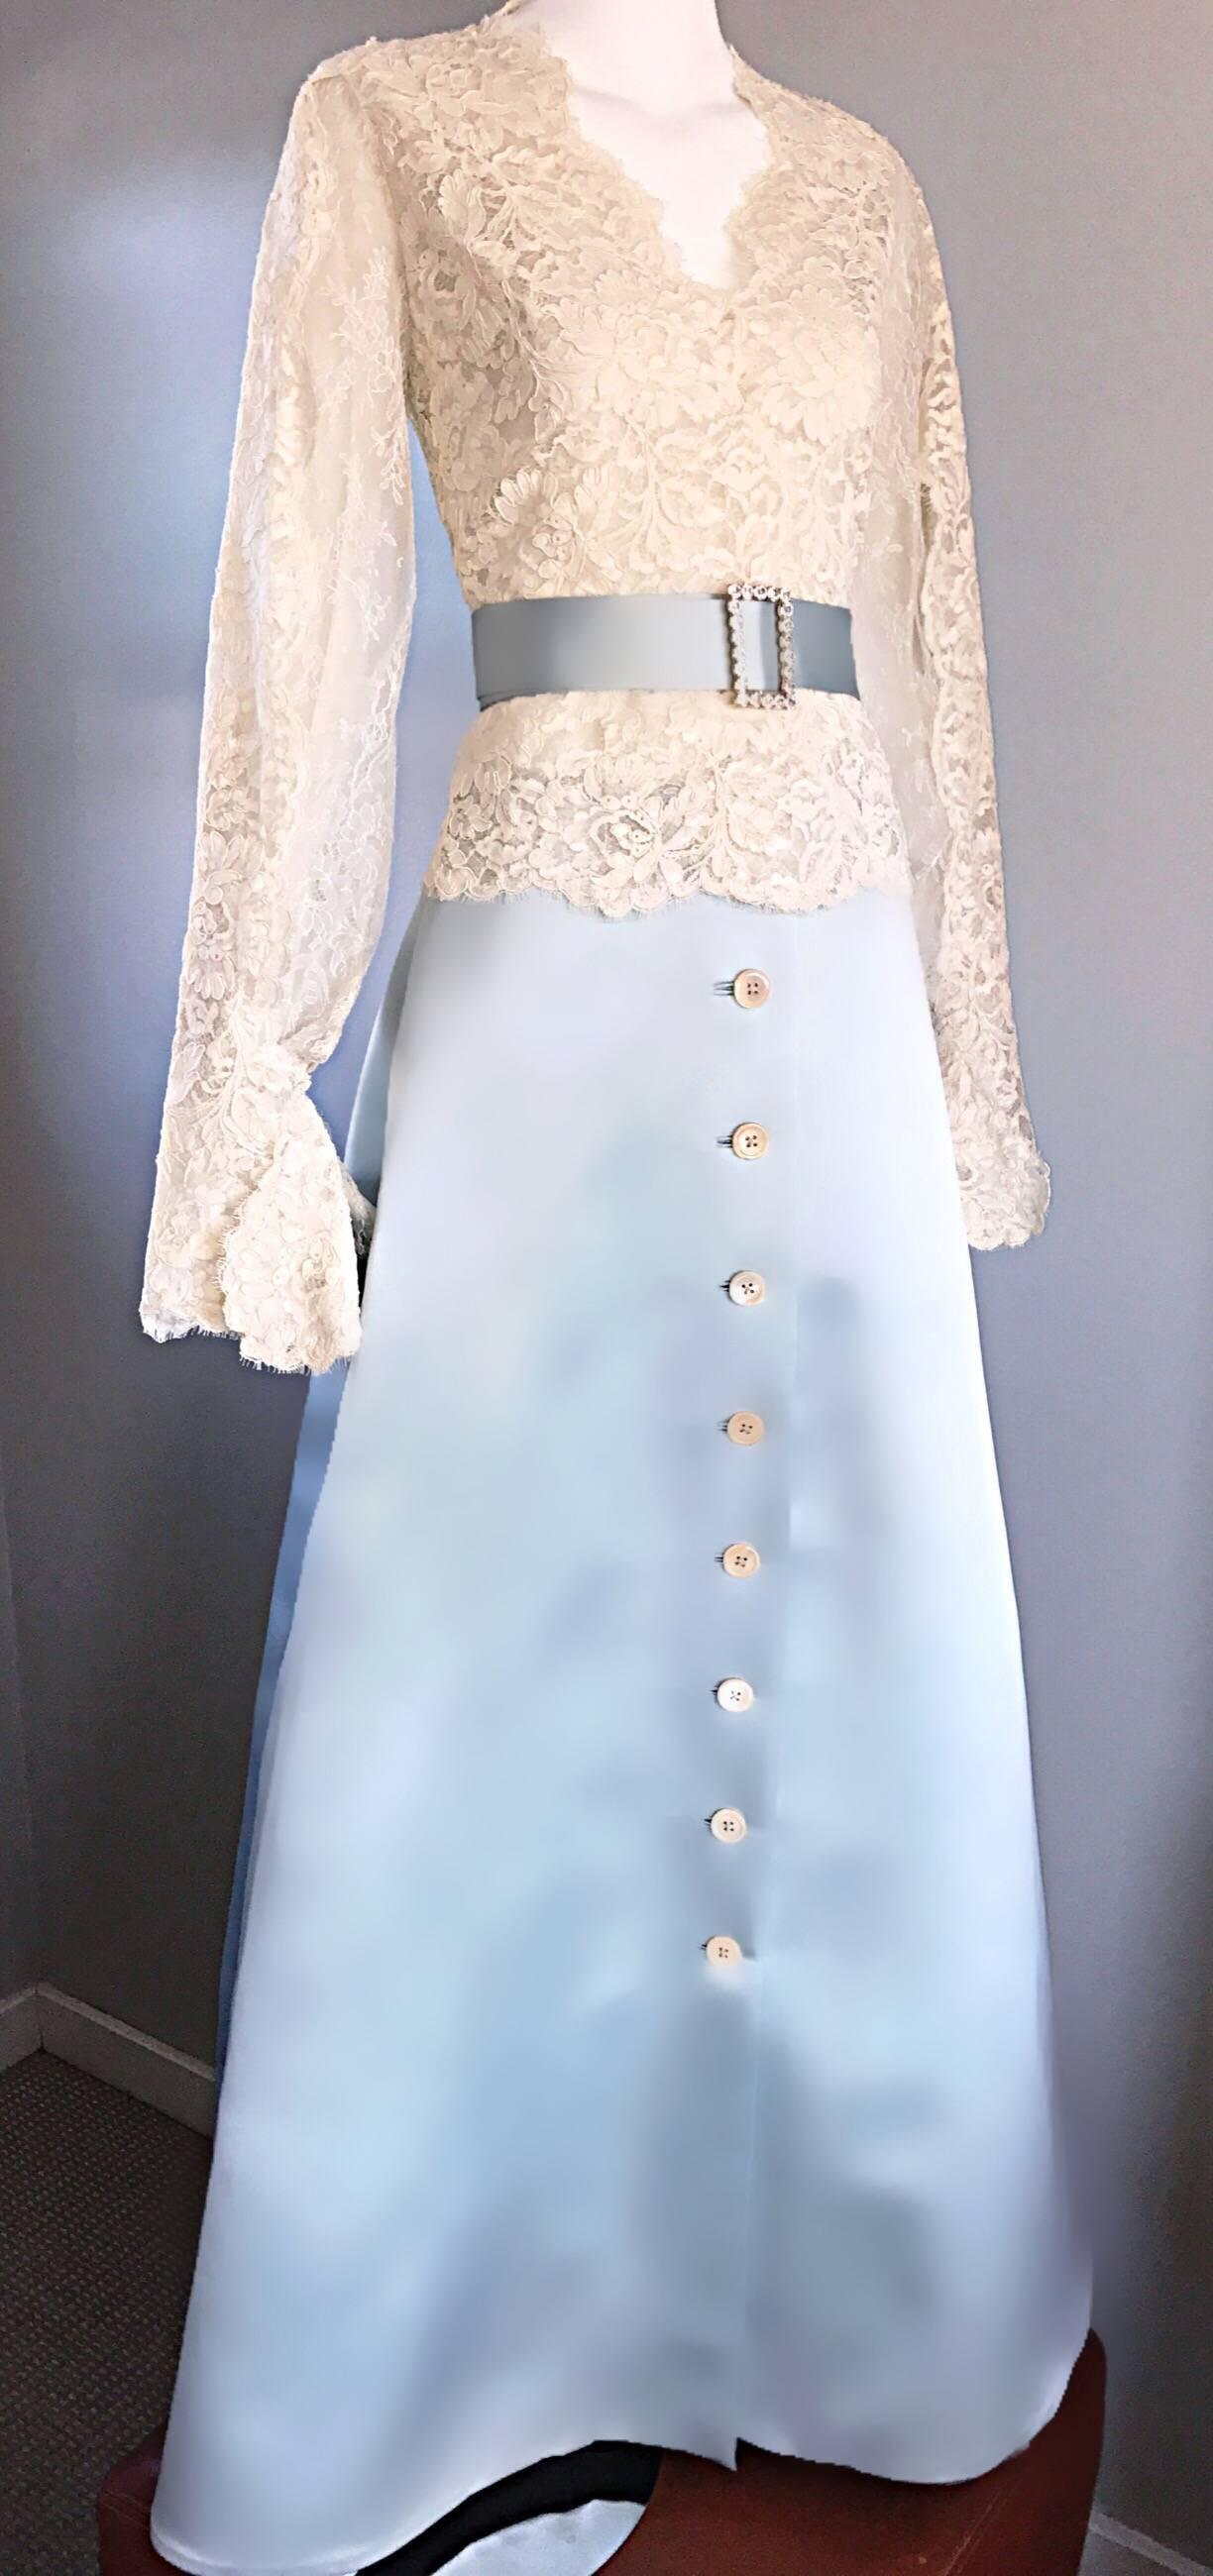 Exquisite Vintage Bill Blass 1970s Baby Blue + White Lace 3 Piece Evening Gown 2